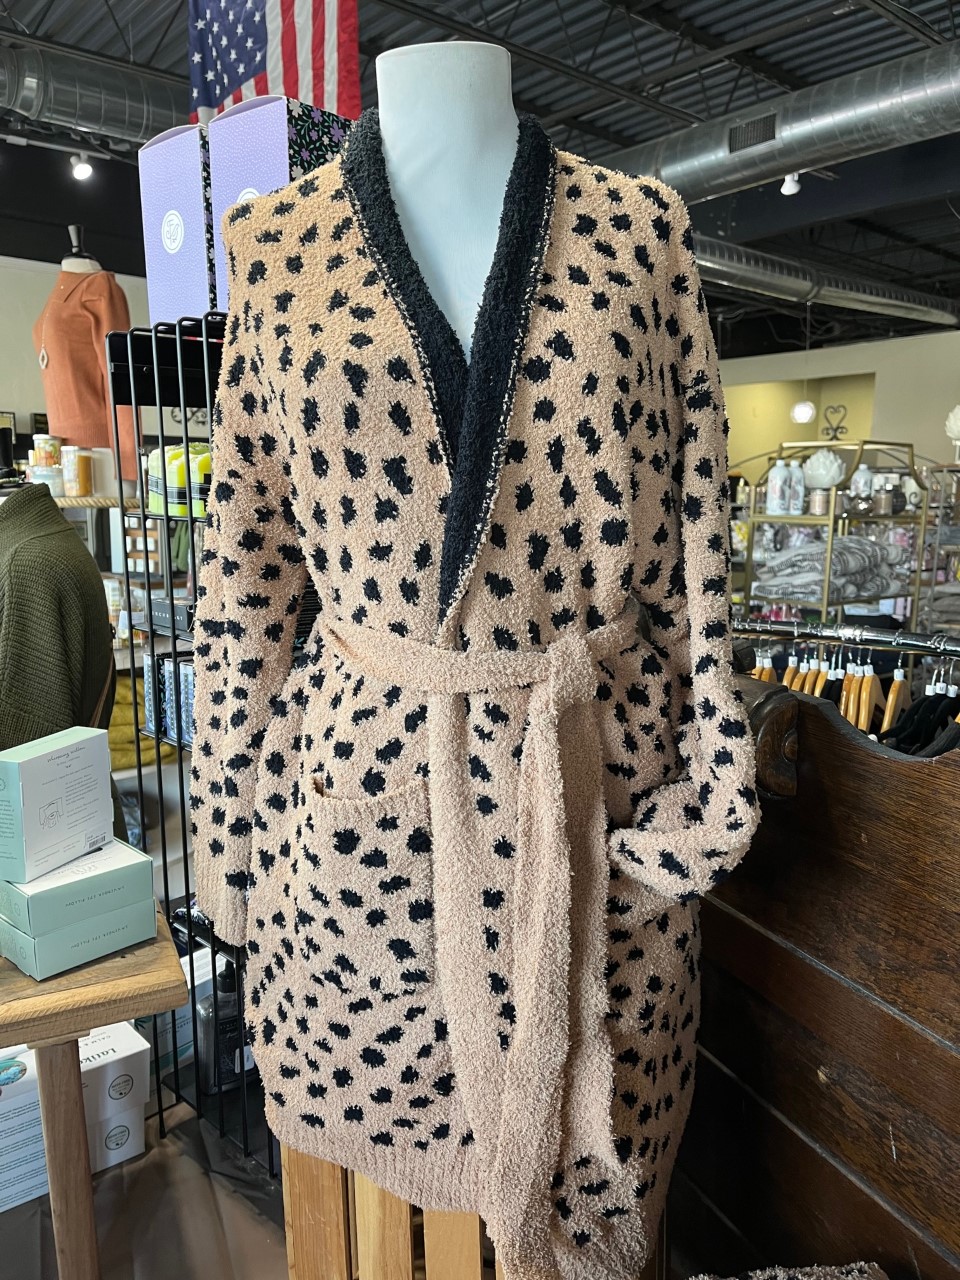 A cozy bath robe in leopard print